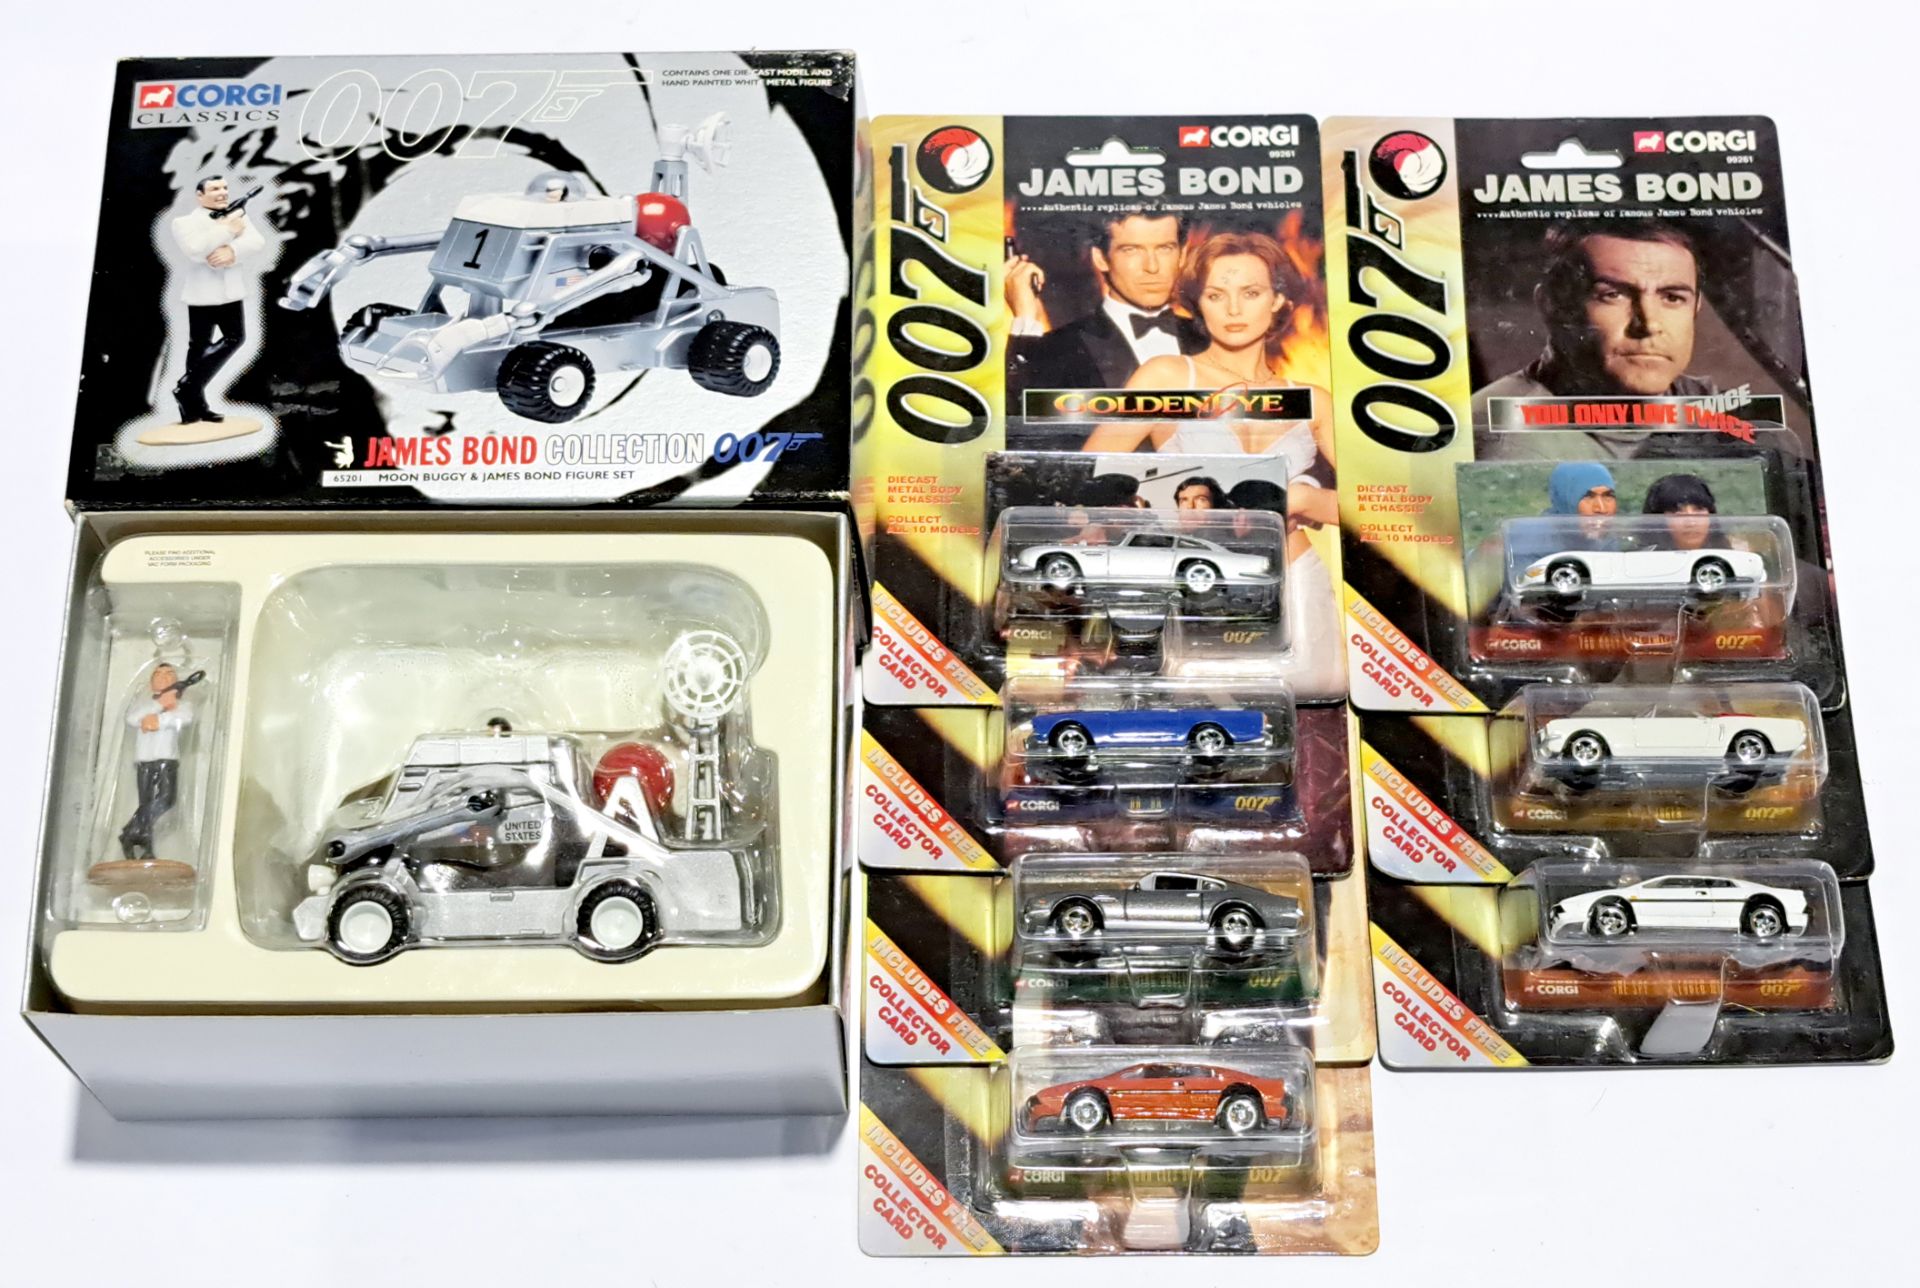 Corgi, a boxed & carded James Bond 007 vehicle group